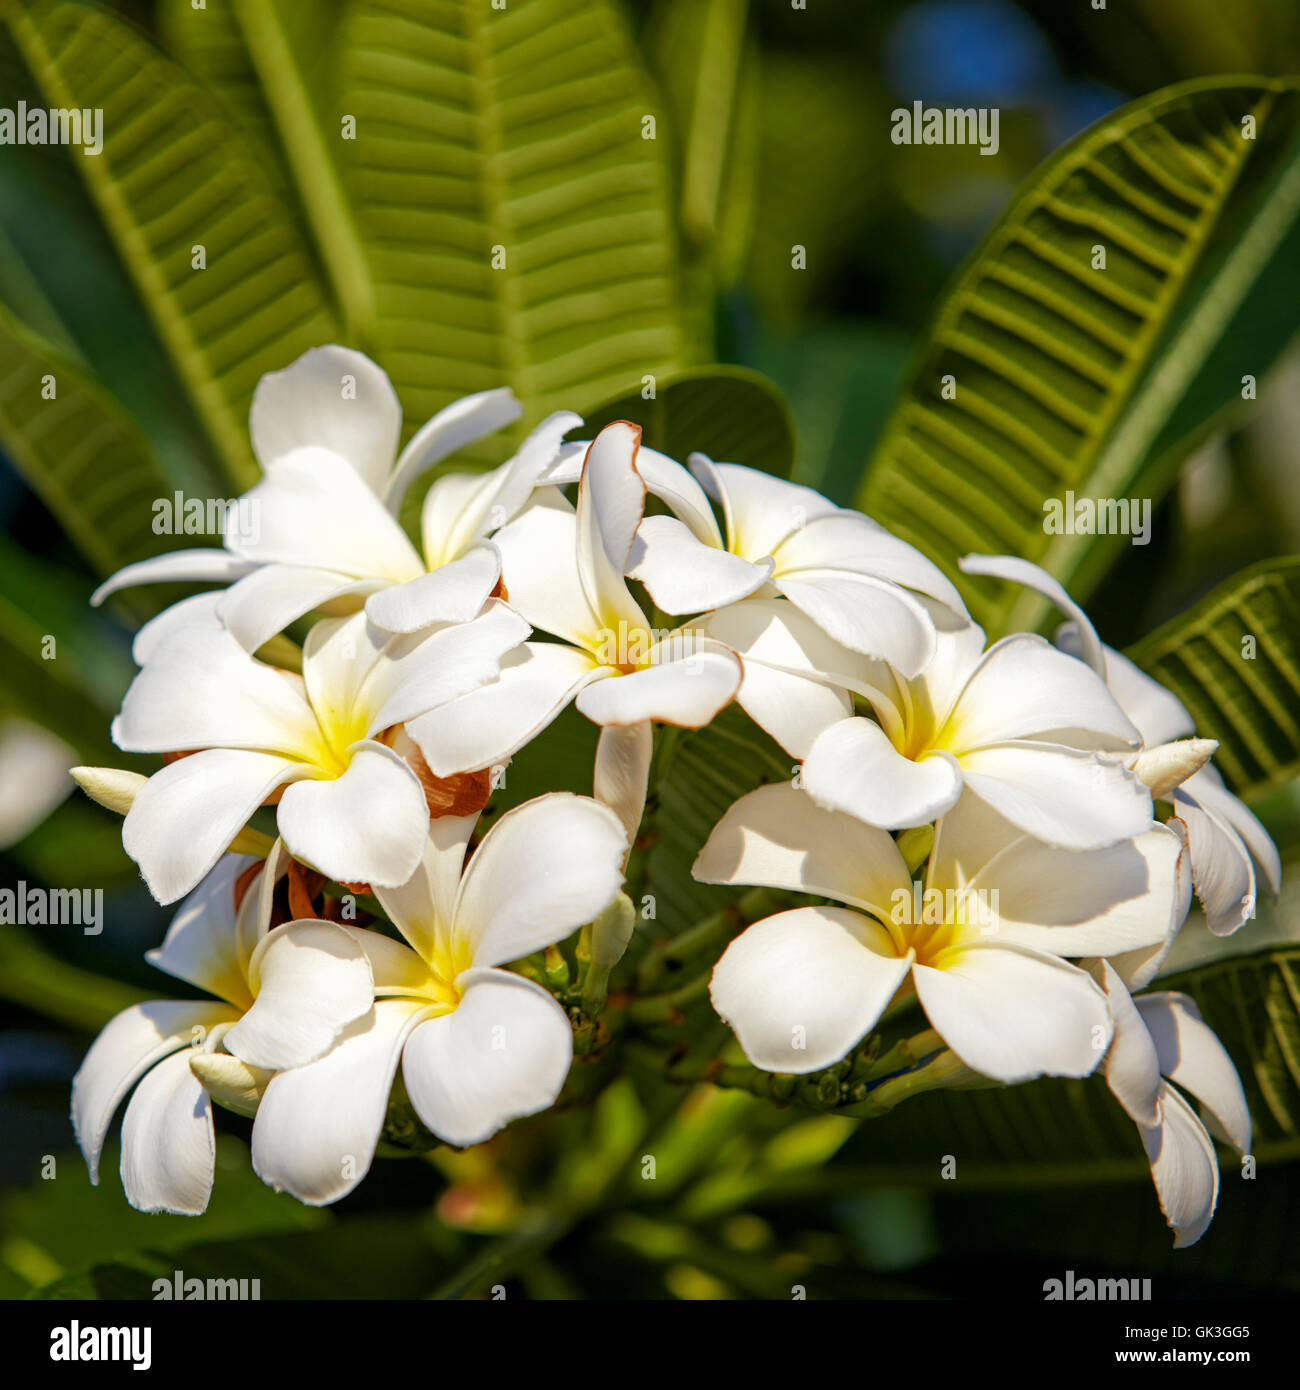 Frangipani flowers. Scientific name: Plumeria obtusa. Hoi An, Quang Nam Province, Vietnam. Stock Photo